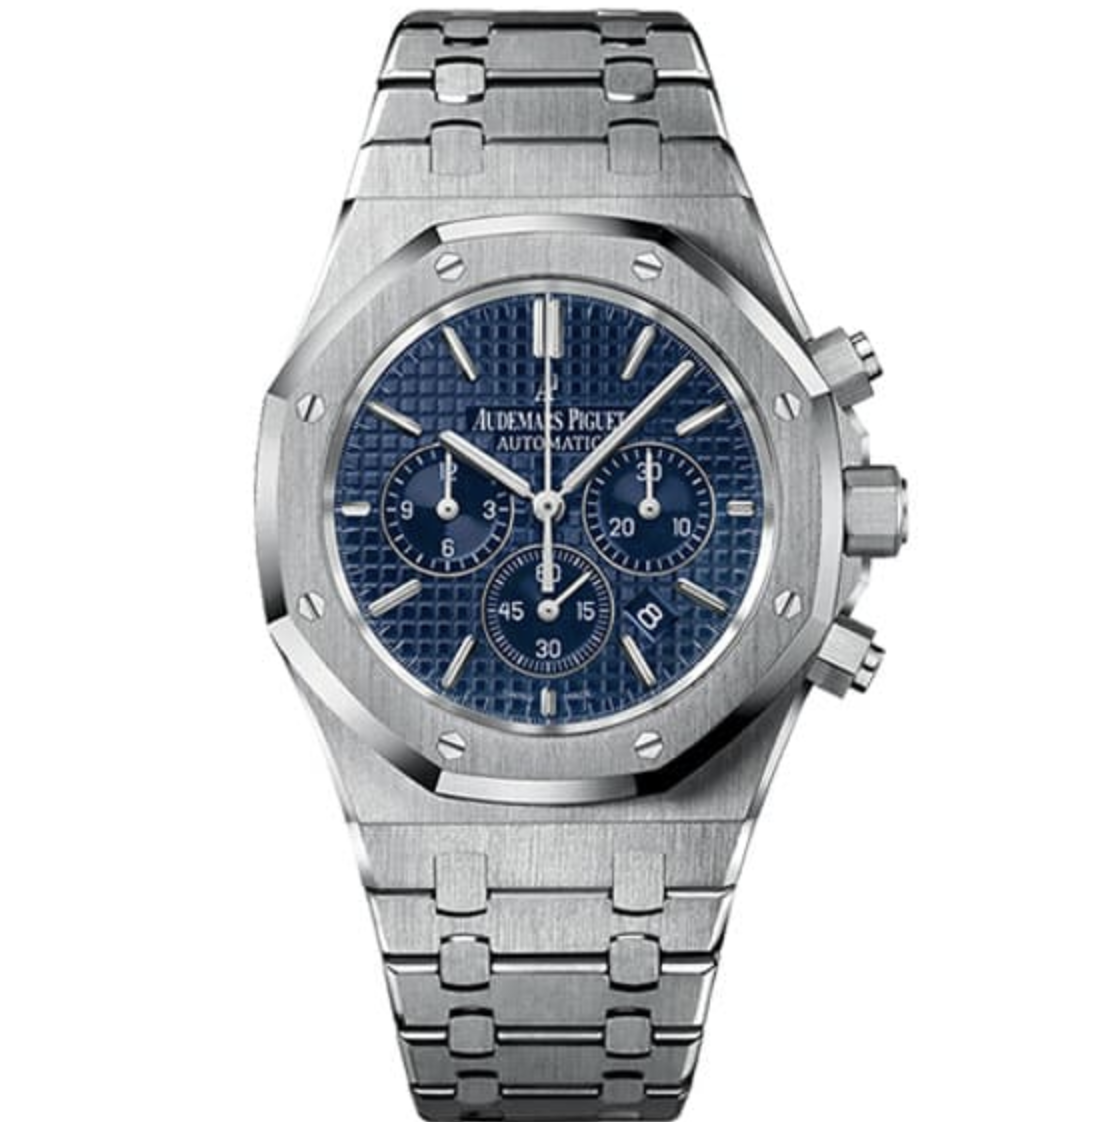 Best Swiss Clone Replica Royal Oak - Silver/Blue Chronograph - Replica Swiss Clones Watches